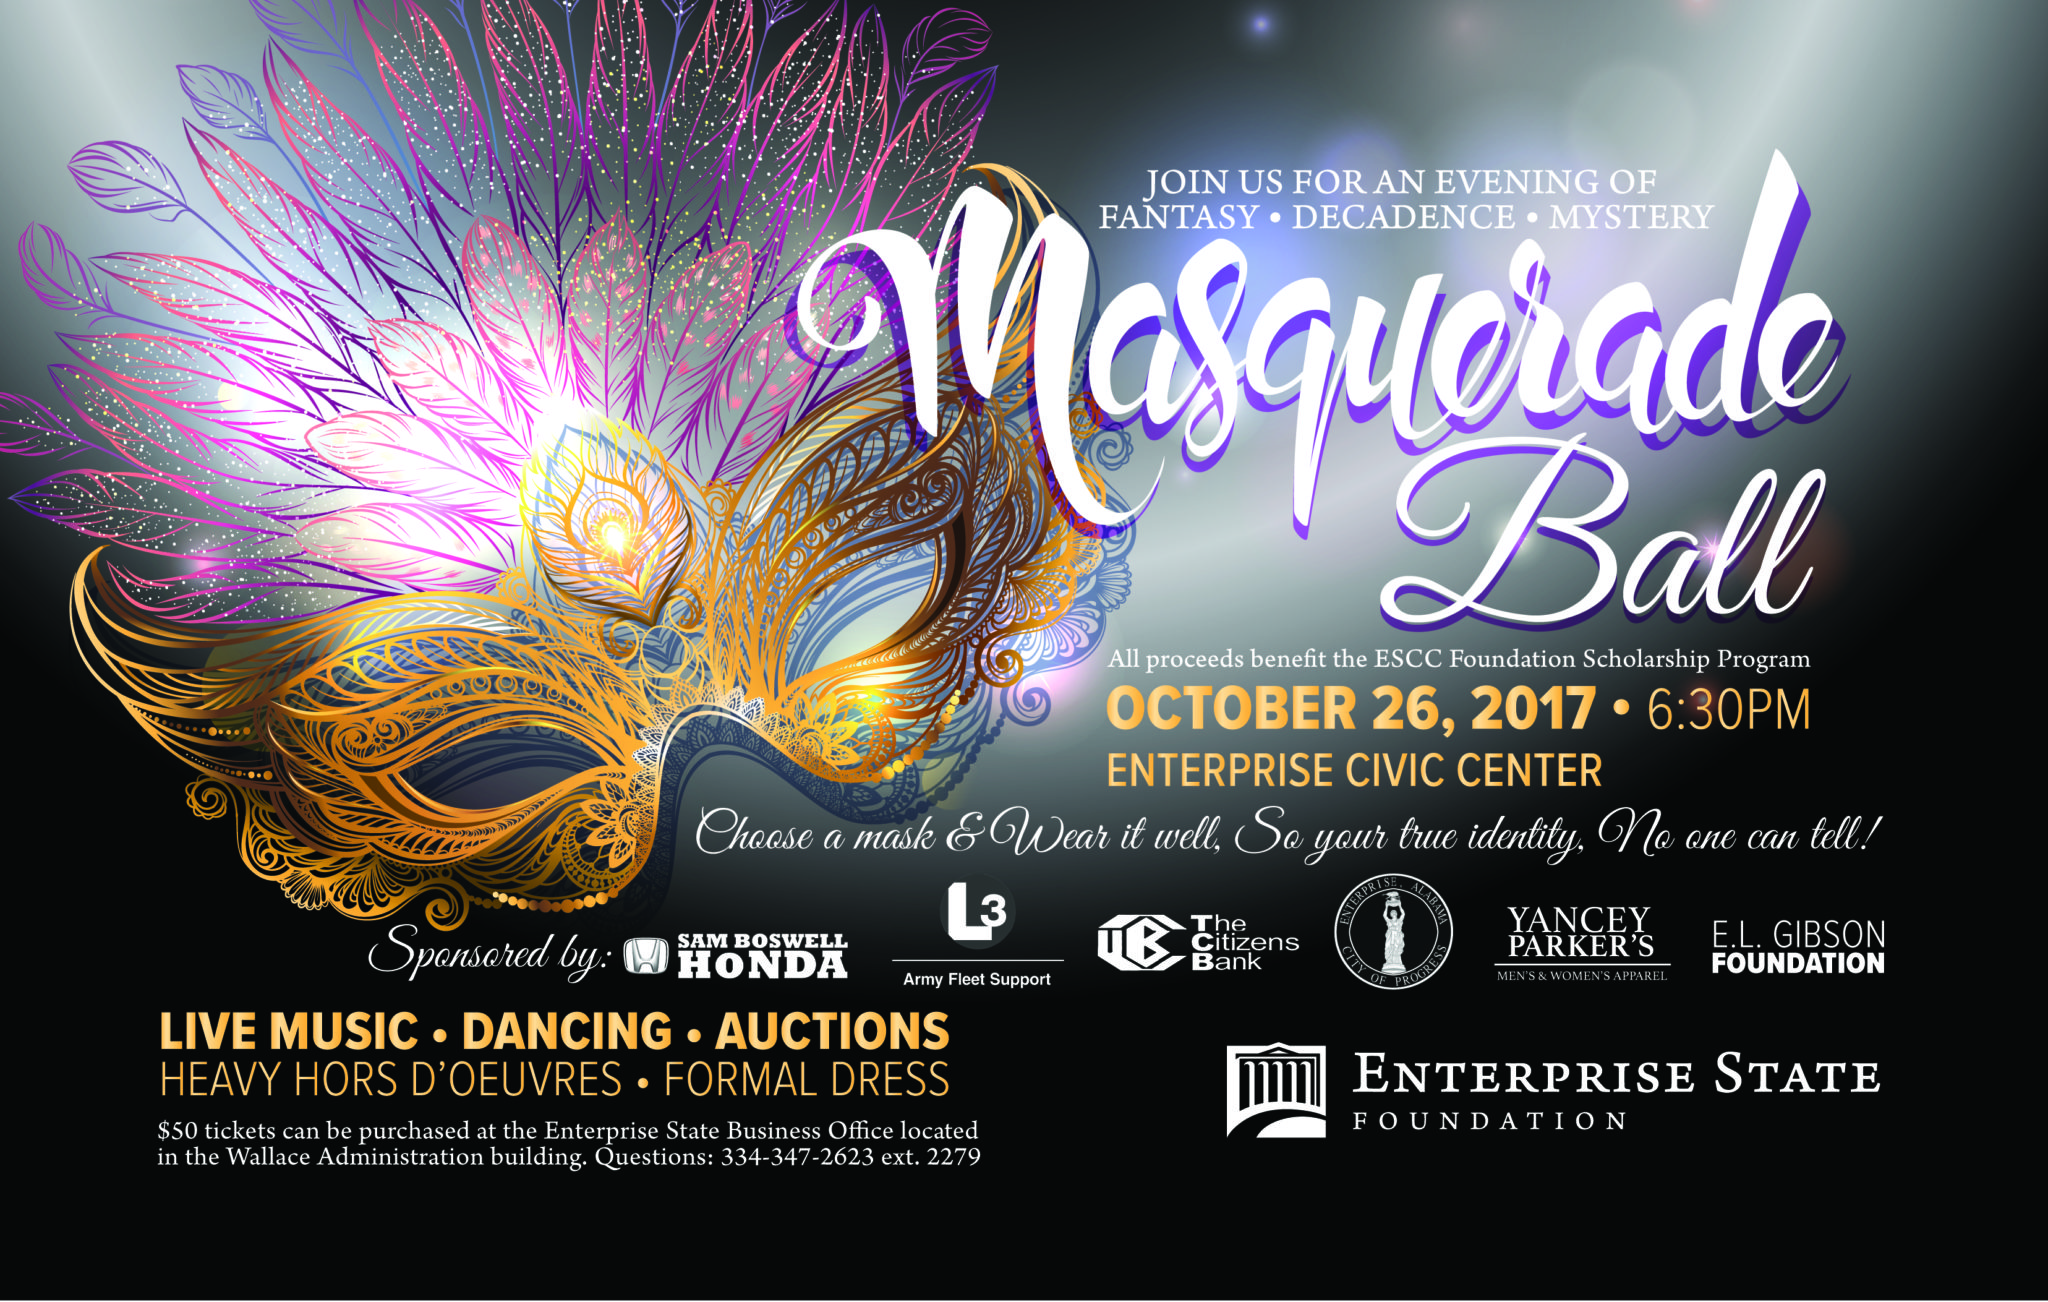 ESCC Foundation to Host Masquerade Ball for SCHOLARSHIP DOLLARS!